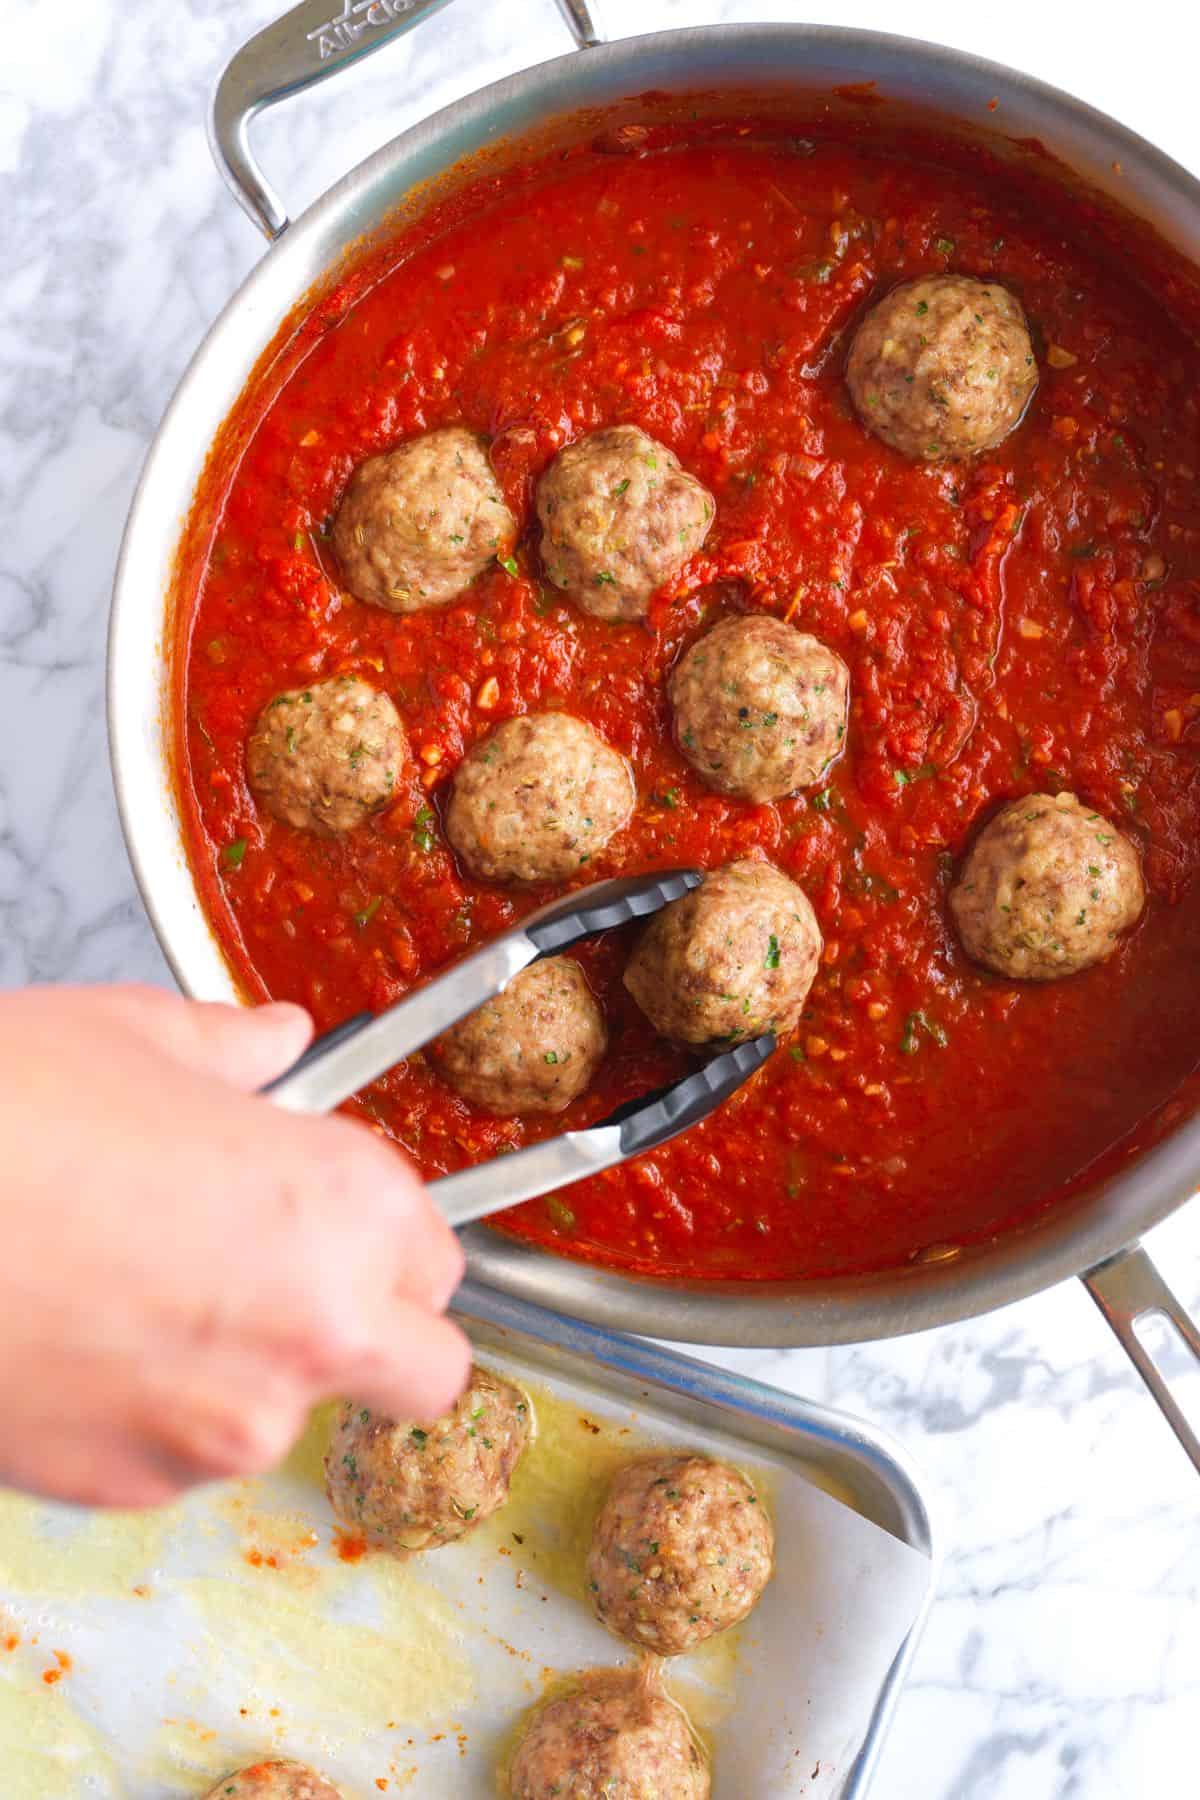 Putting baked meatballs into homemade marinara sauce ready for spaghetti and meatballs